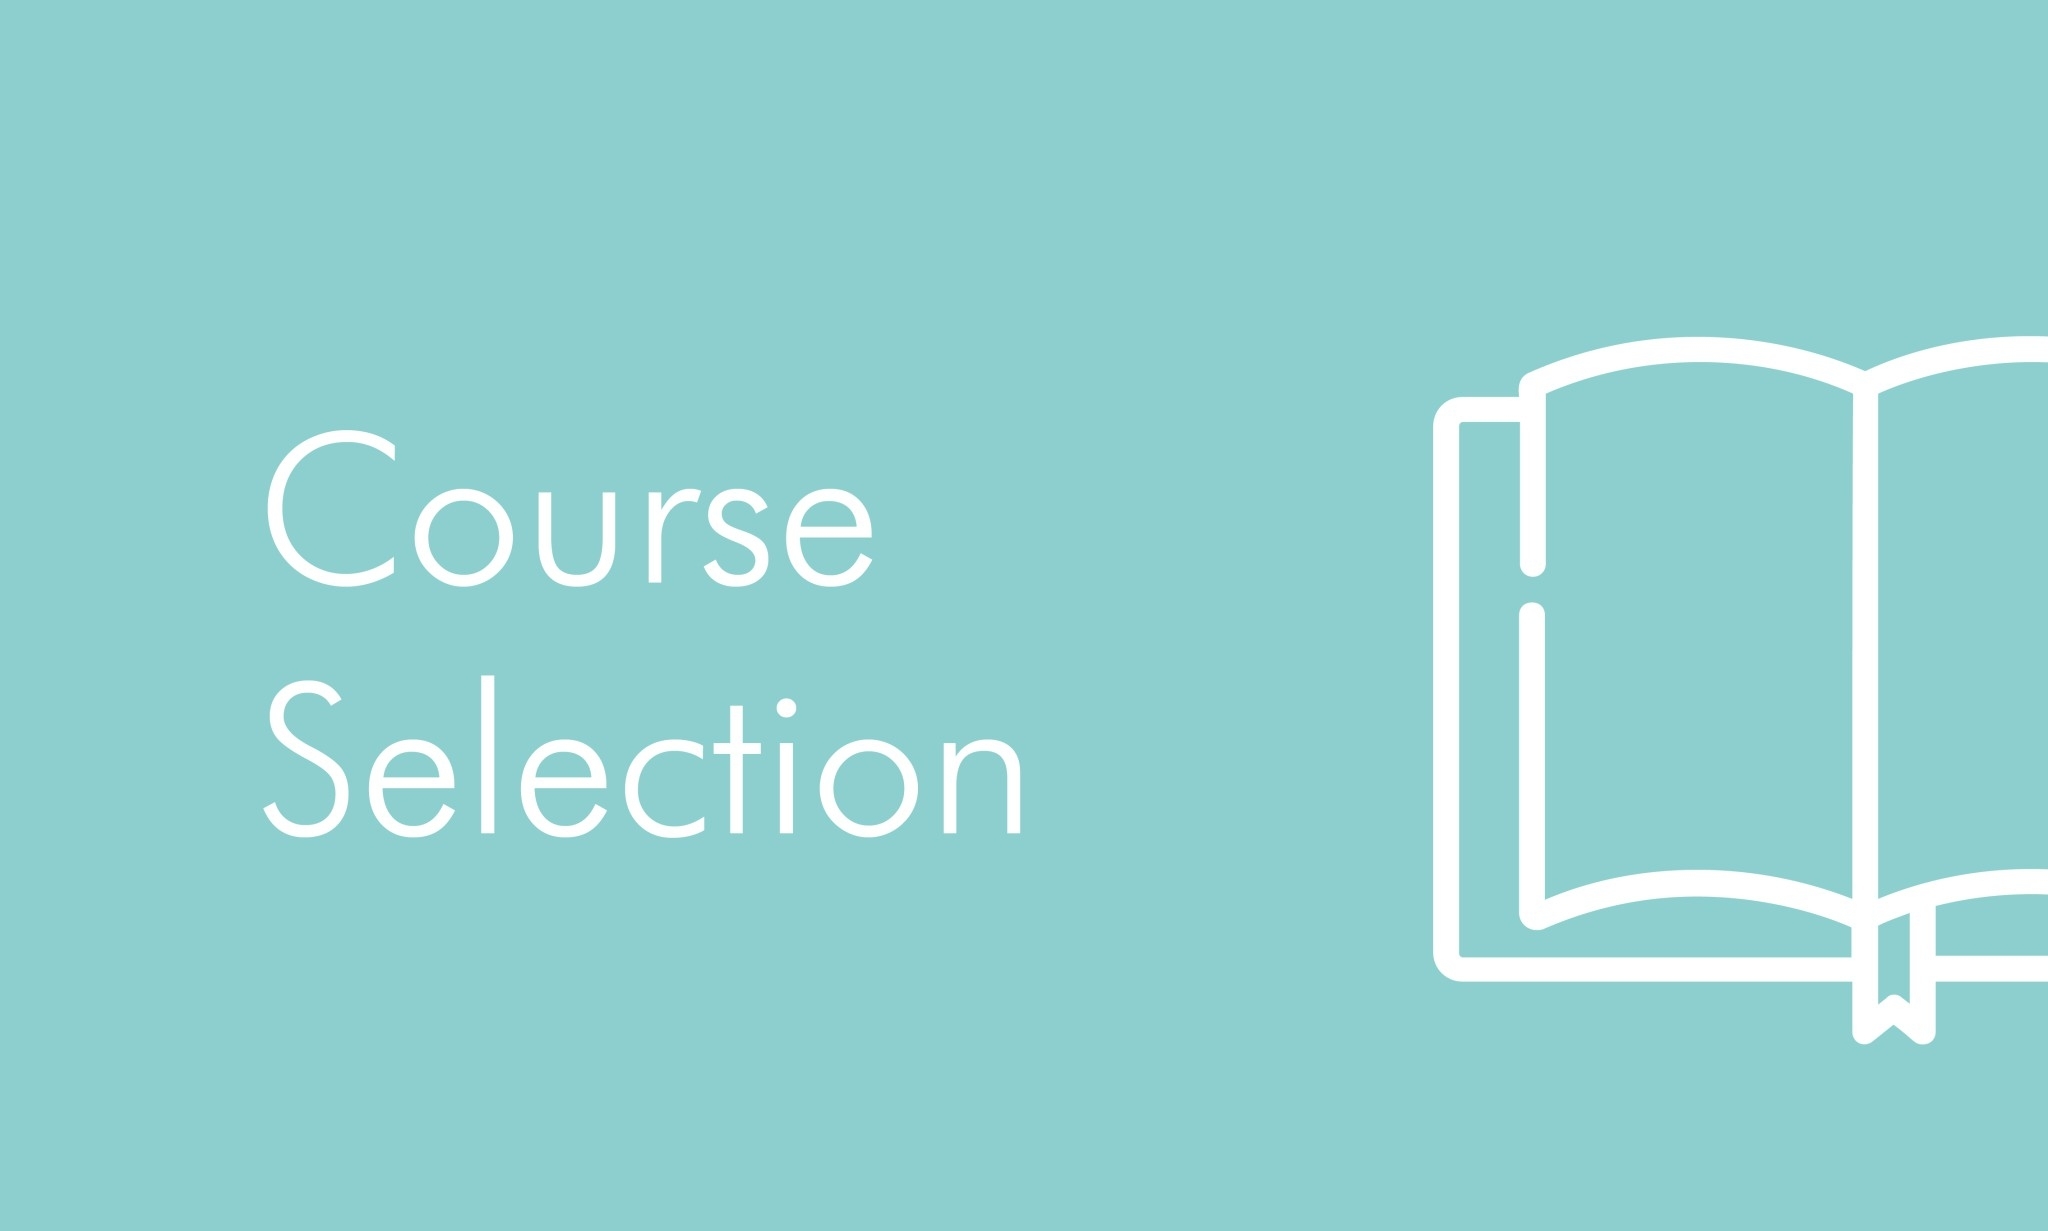 Course Selection